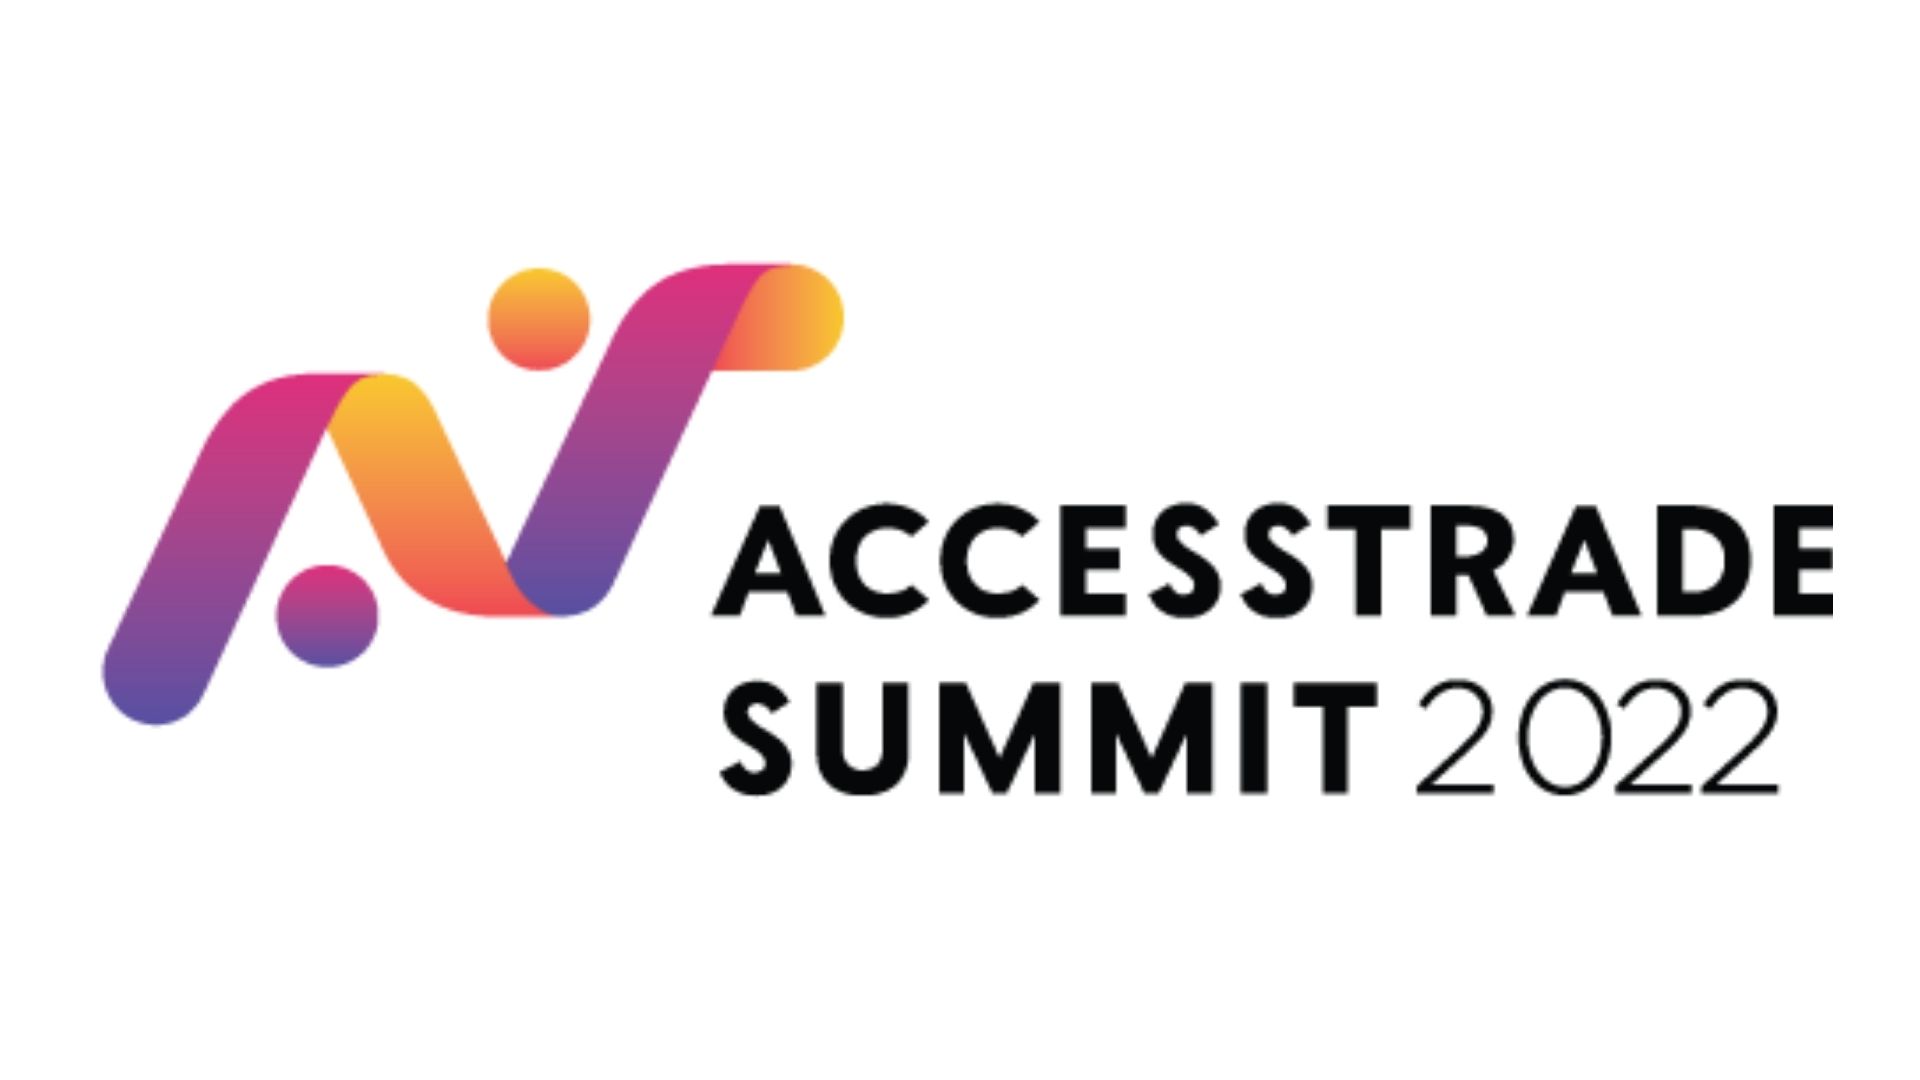 ACCESSTRADE Summit 2022 - POST-EVENT PRESS RELEASE